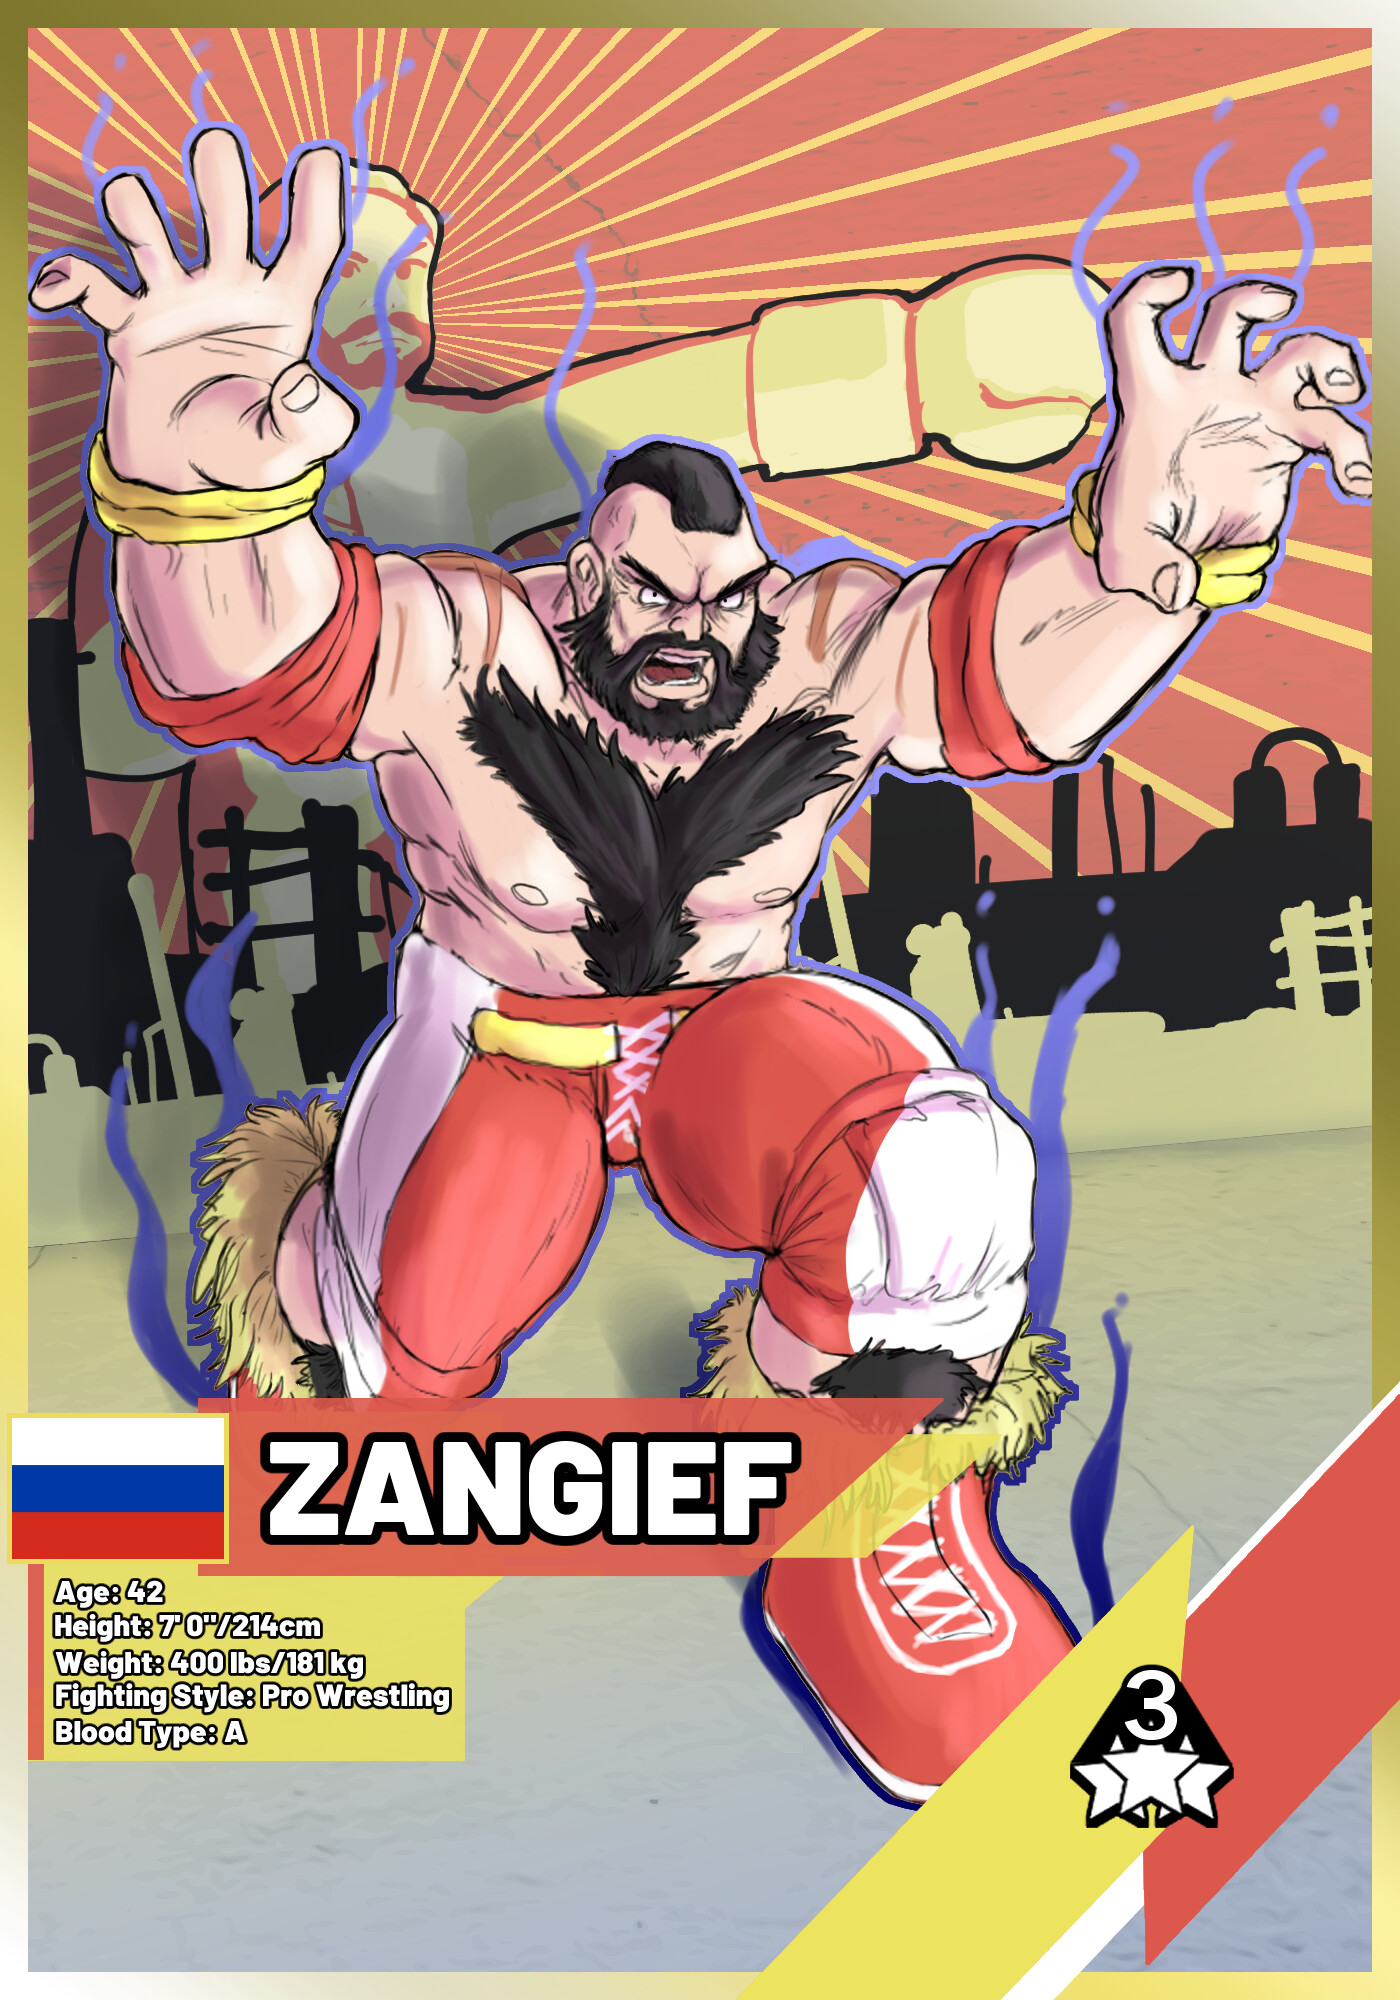 ArtStation - Workout Street Fighter - Zangief